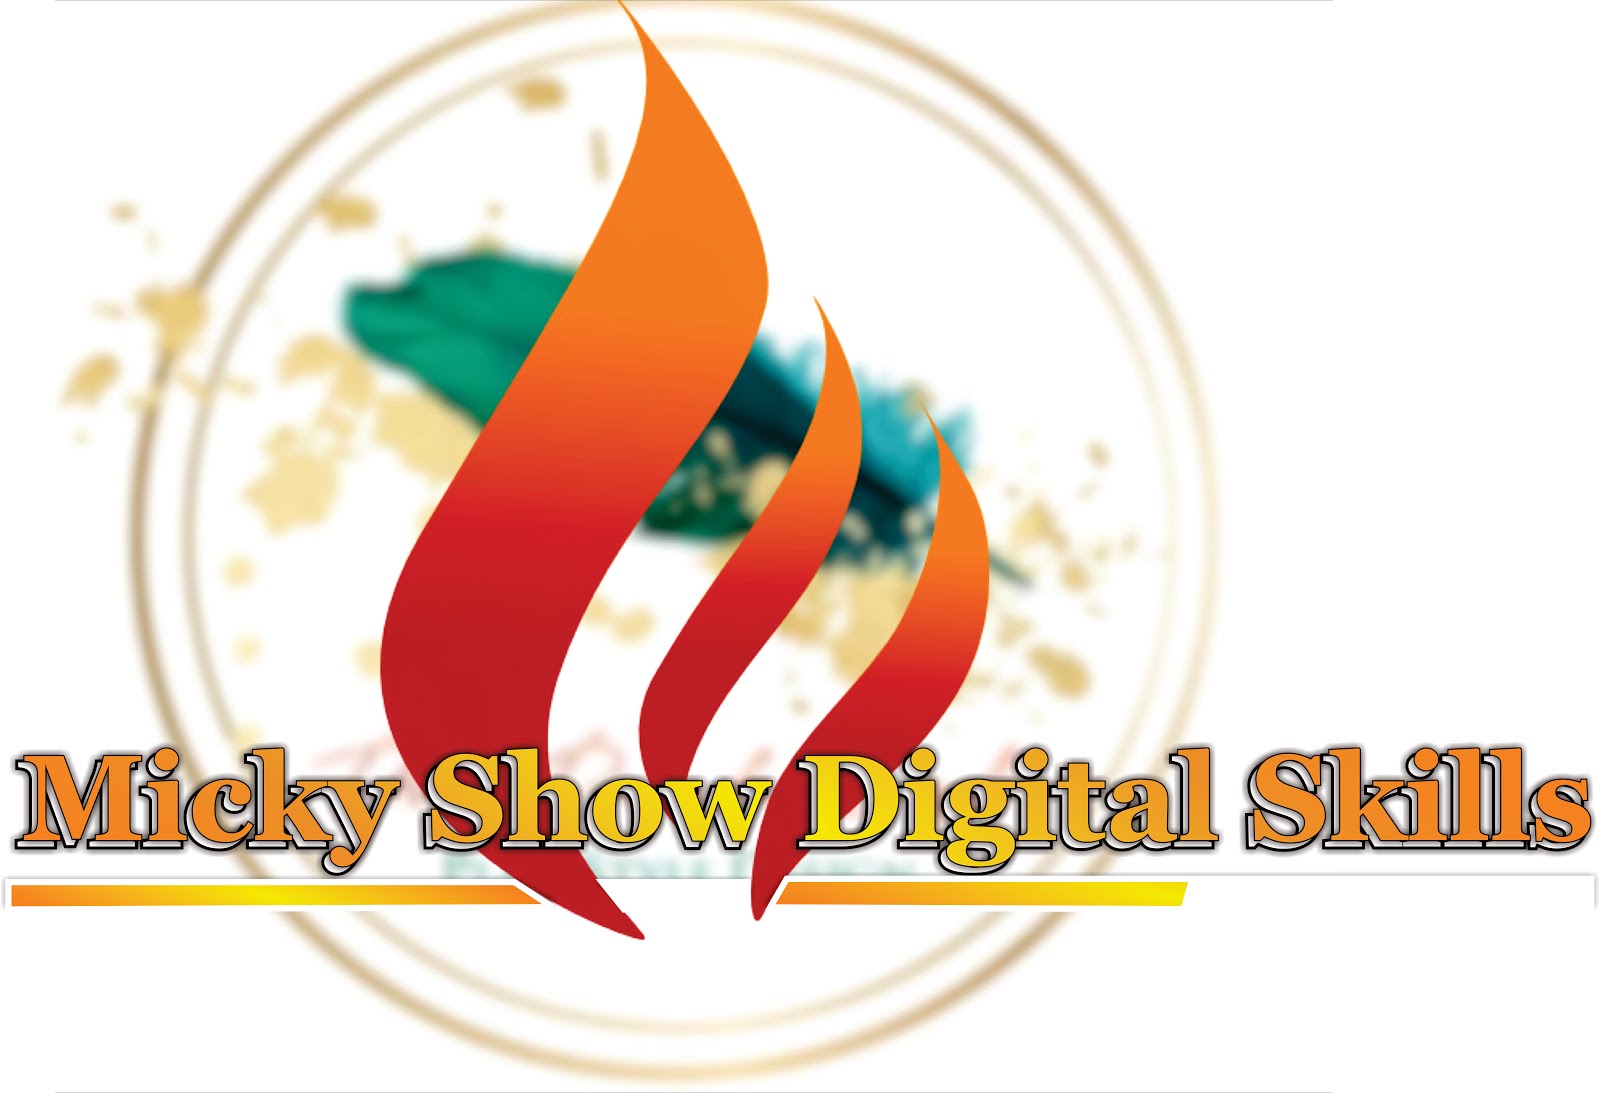 Micky Show Digital Skills